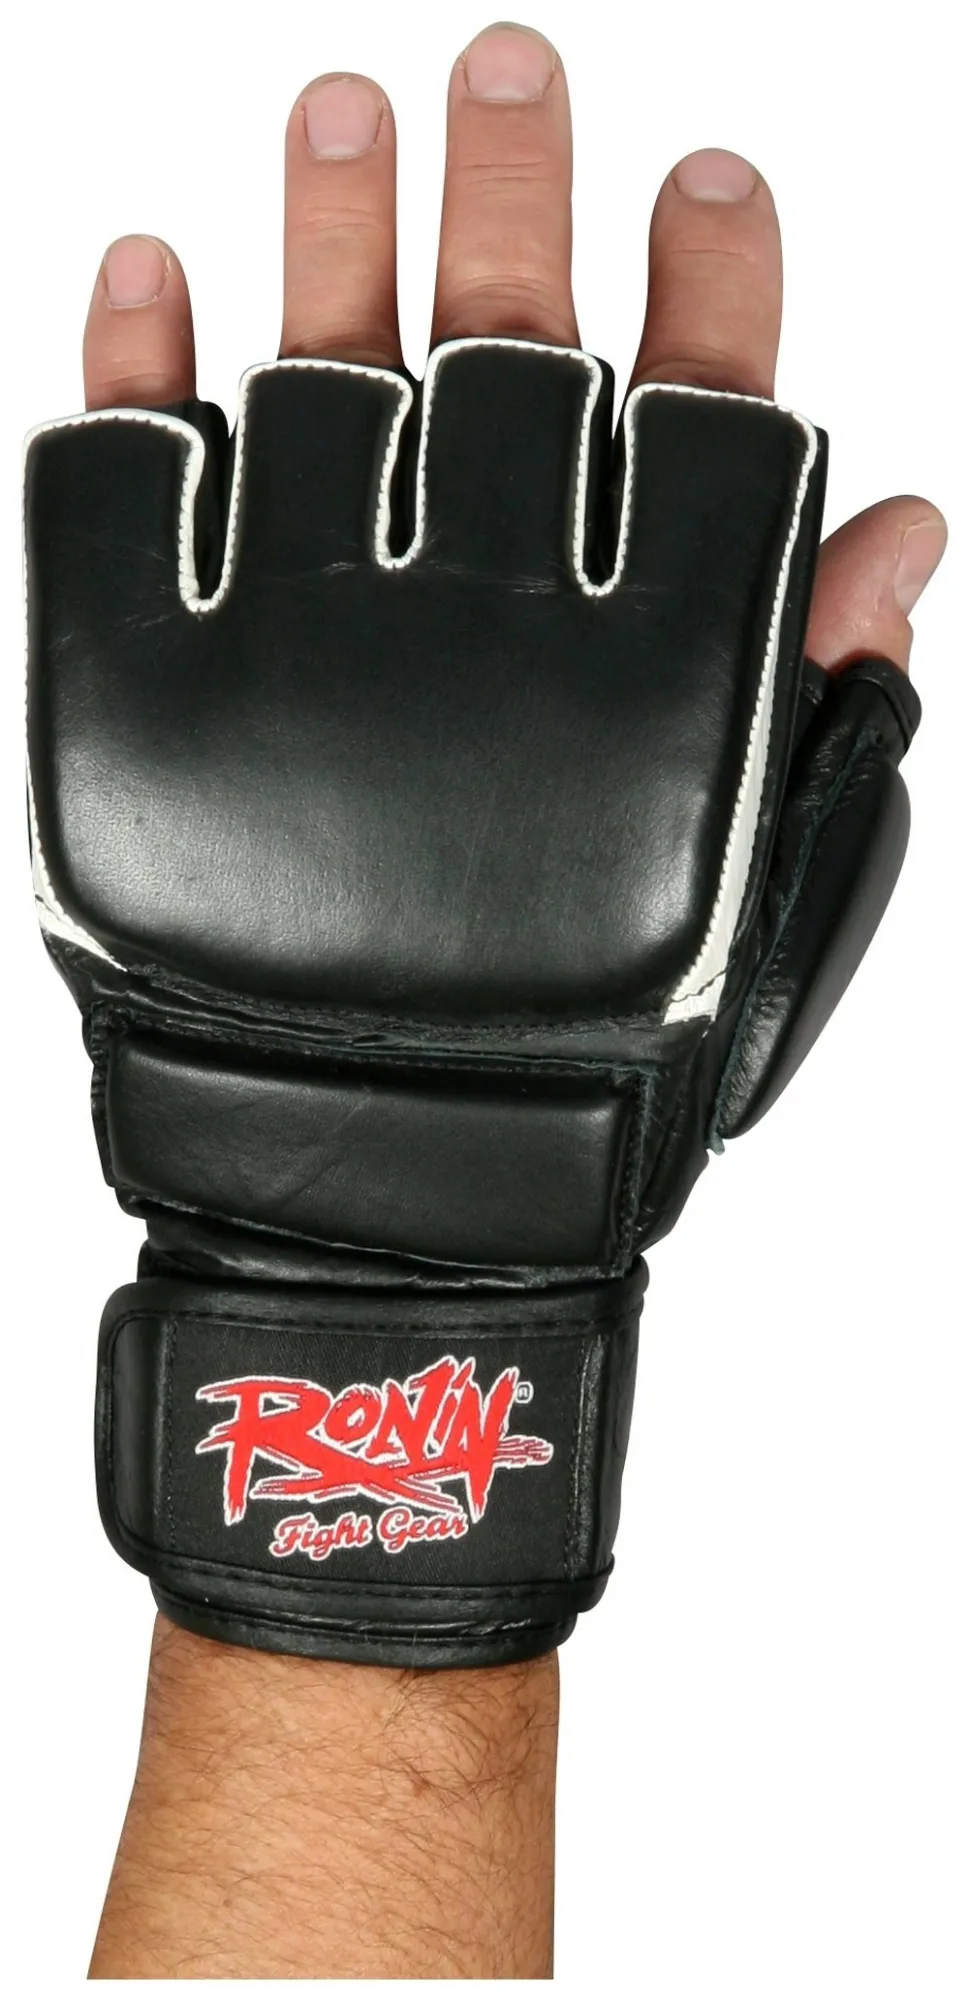 Ronin Gloves extreme | Budoshop Teejoos